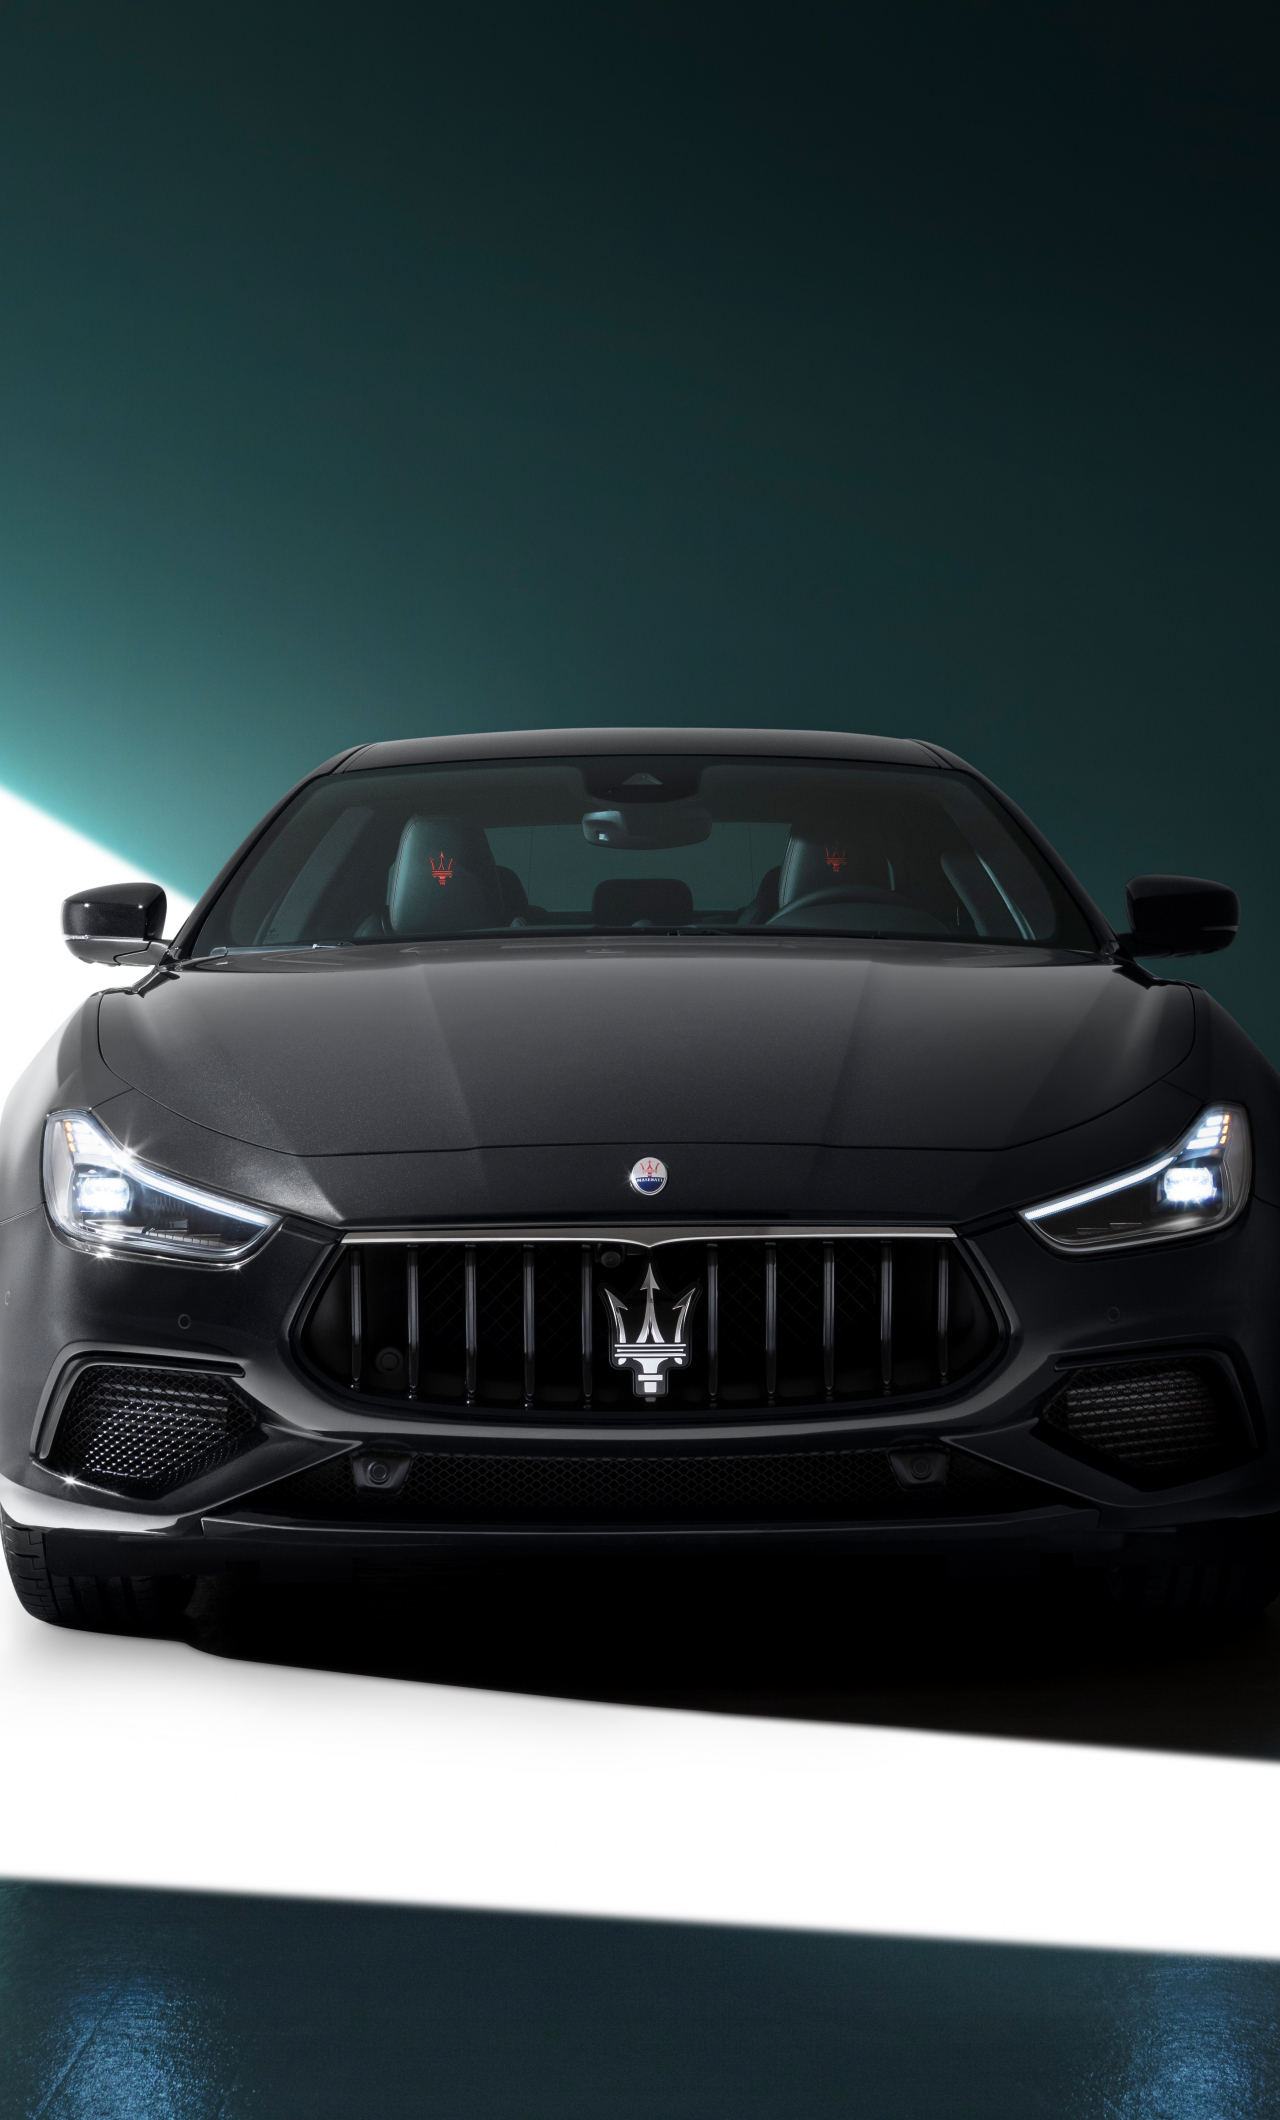 Download 1280x2120 Wallpaper Black 2021 Maserati Ghibli Luxury Sedan Iphone 6 Plus 1280x2120 Hd Image Background 26590